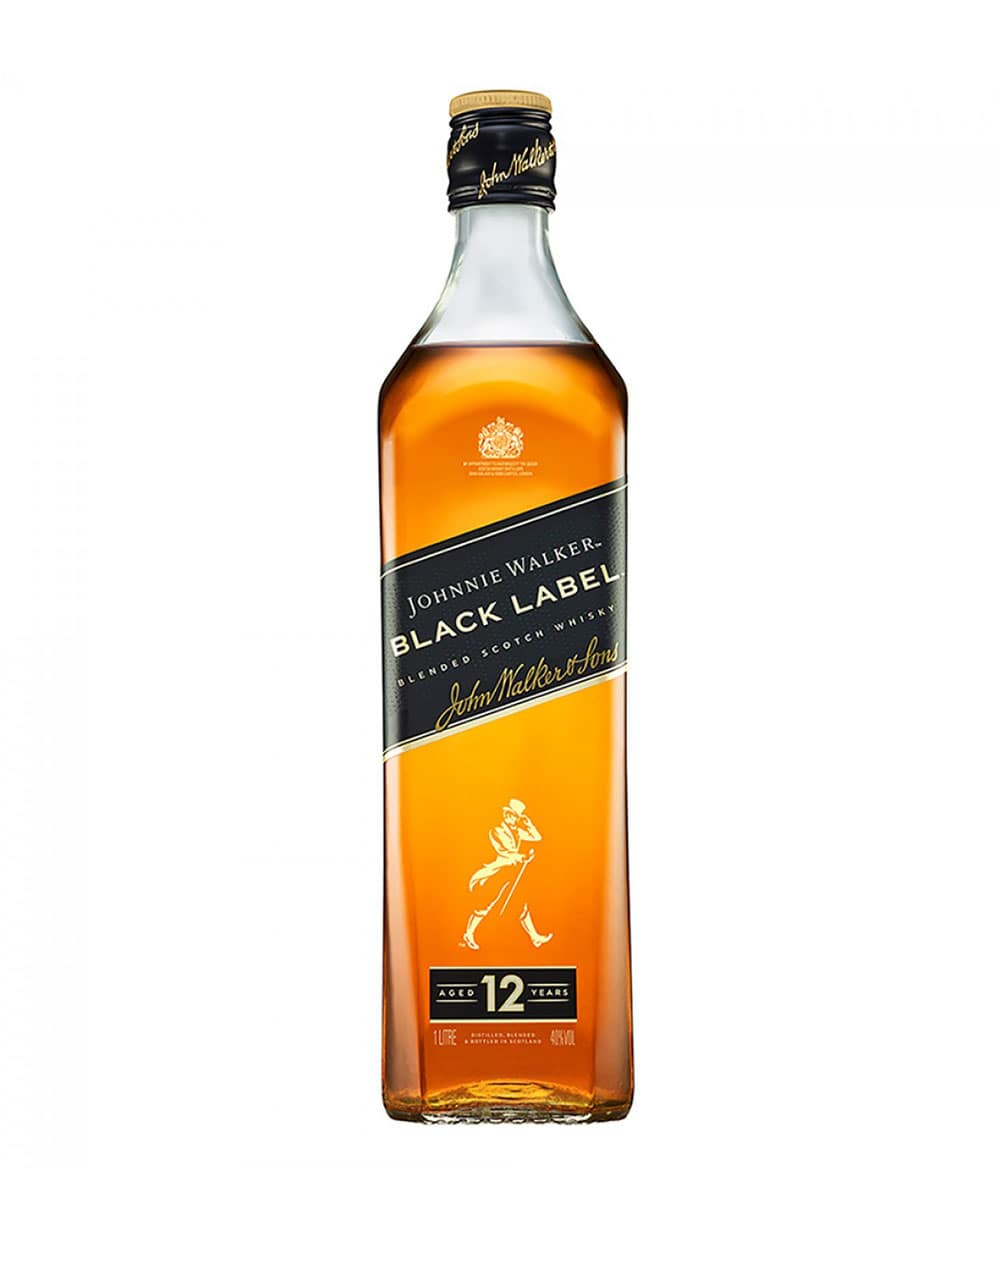 Johnnie Walker Black Label Scotch whisky